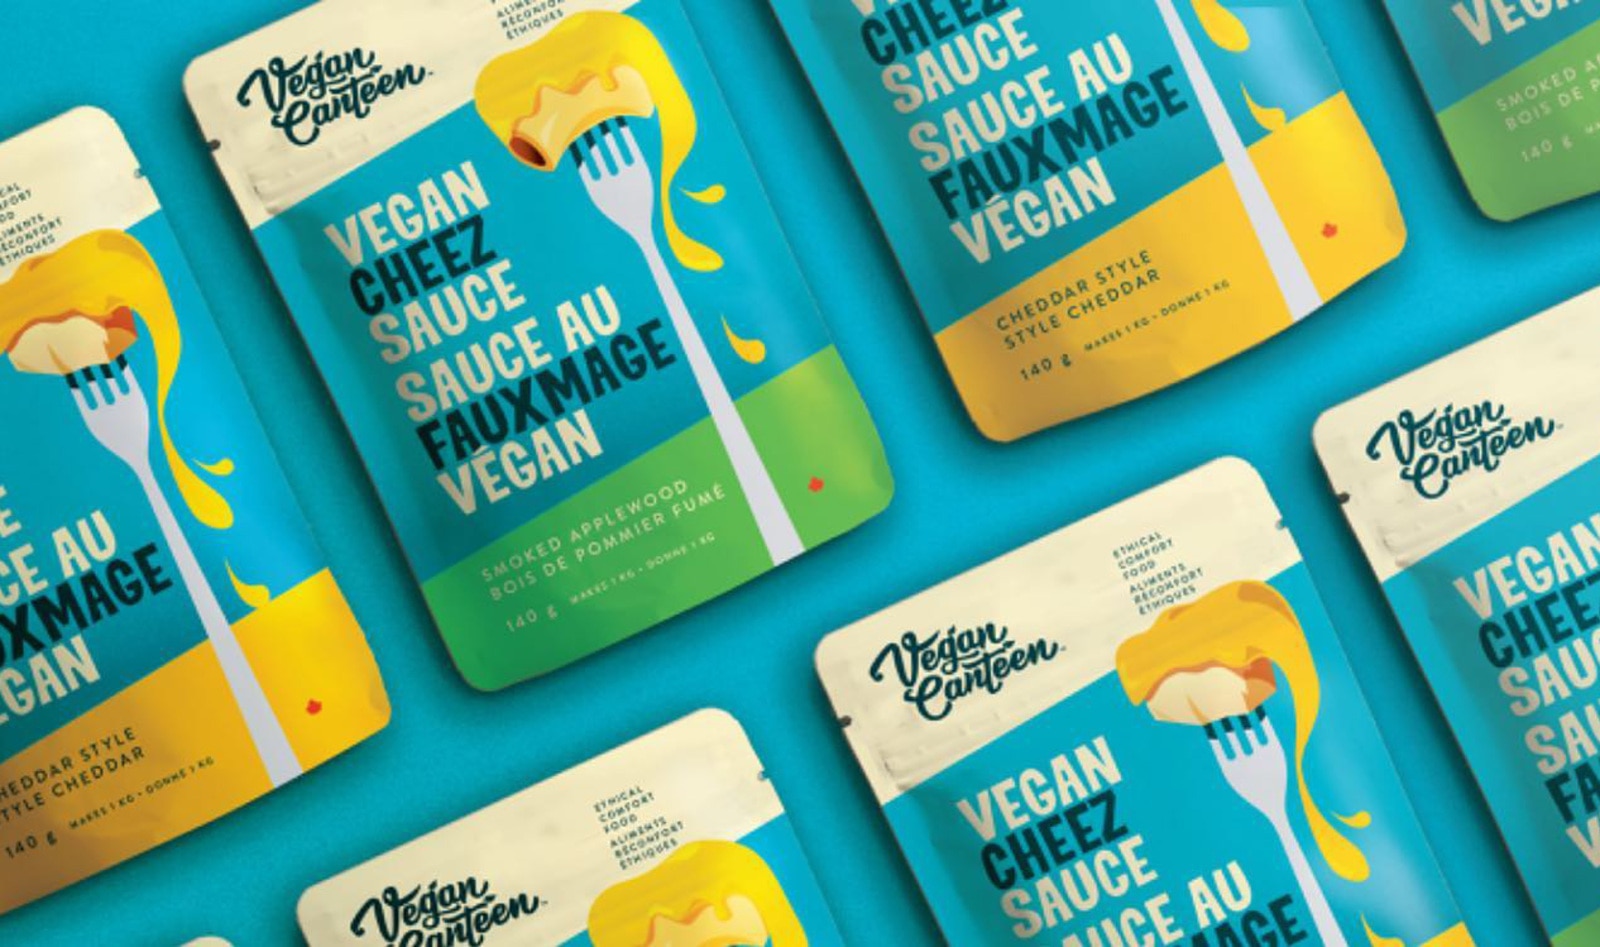 Trans Entrepreneur Launches Vegan Cheese Brand After Restaurant Closure&nbsp;